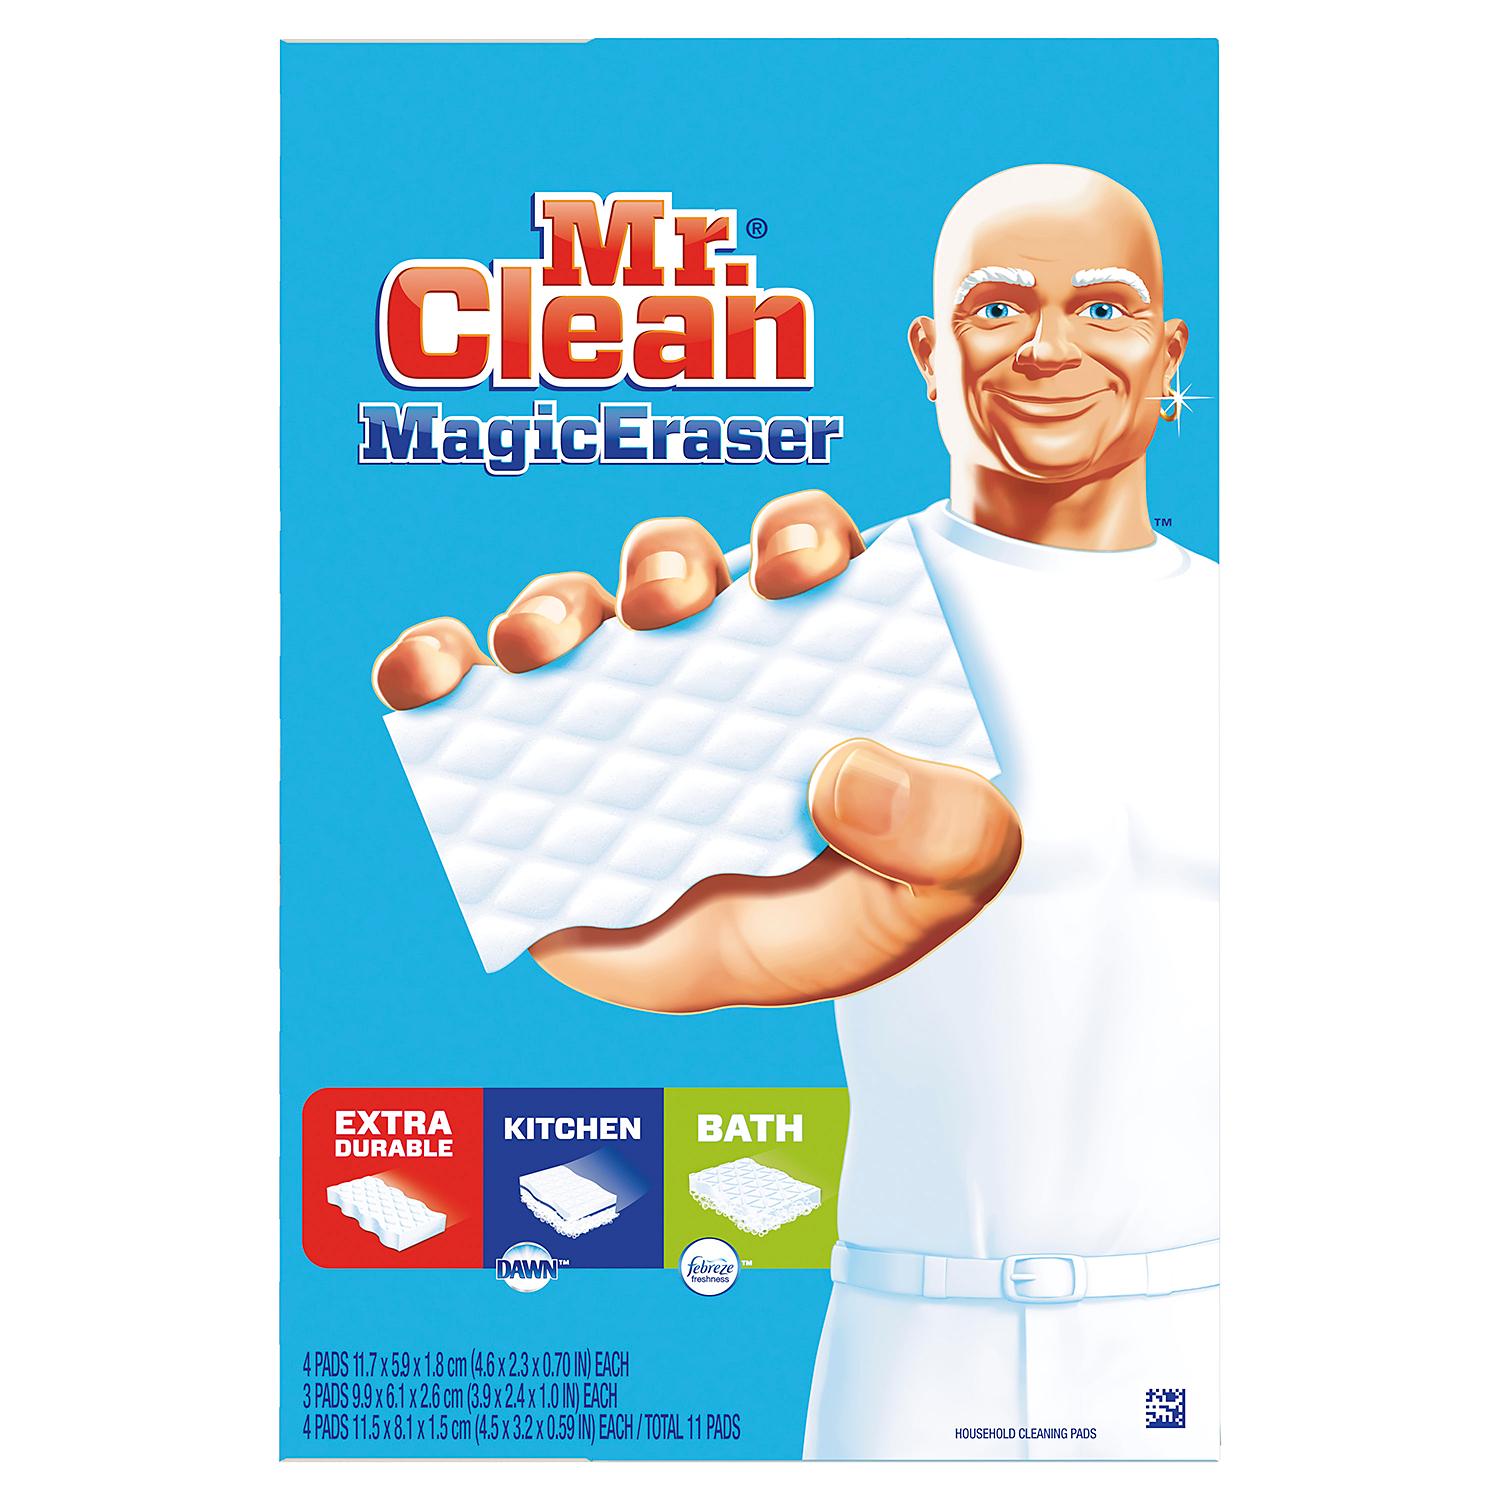 Mr. Clean Magic Eraser with Durafoam Original Cleaning Pads, 9 ct